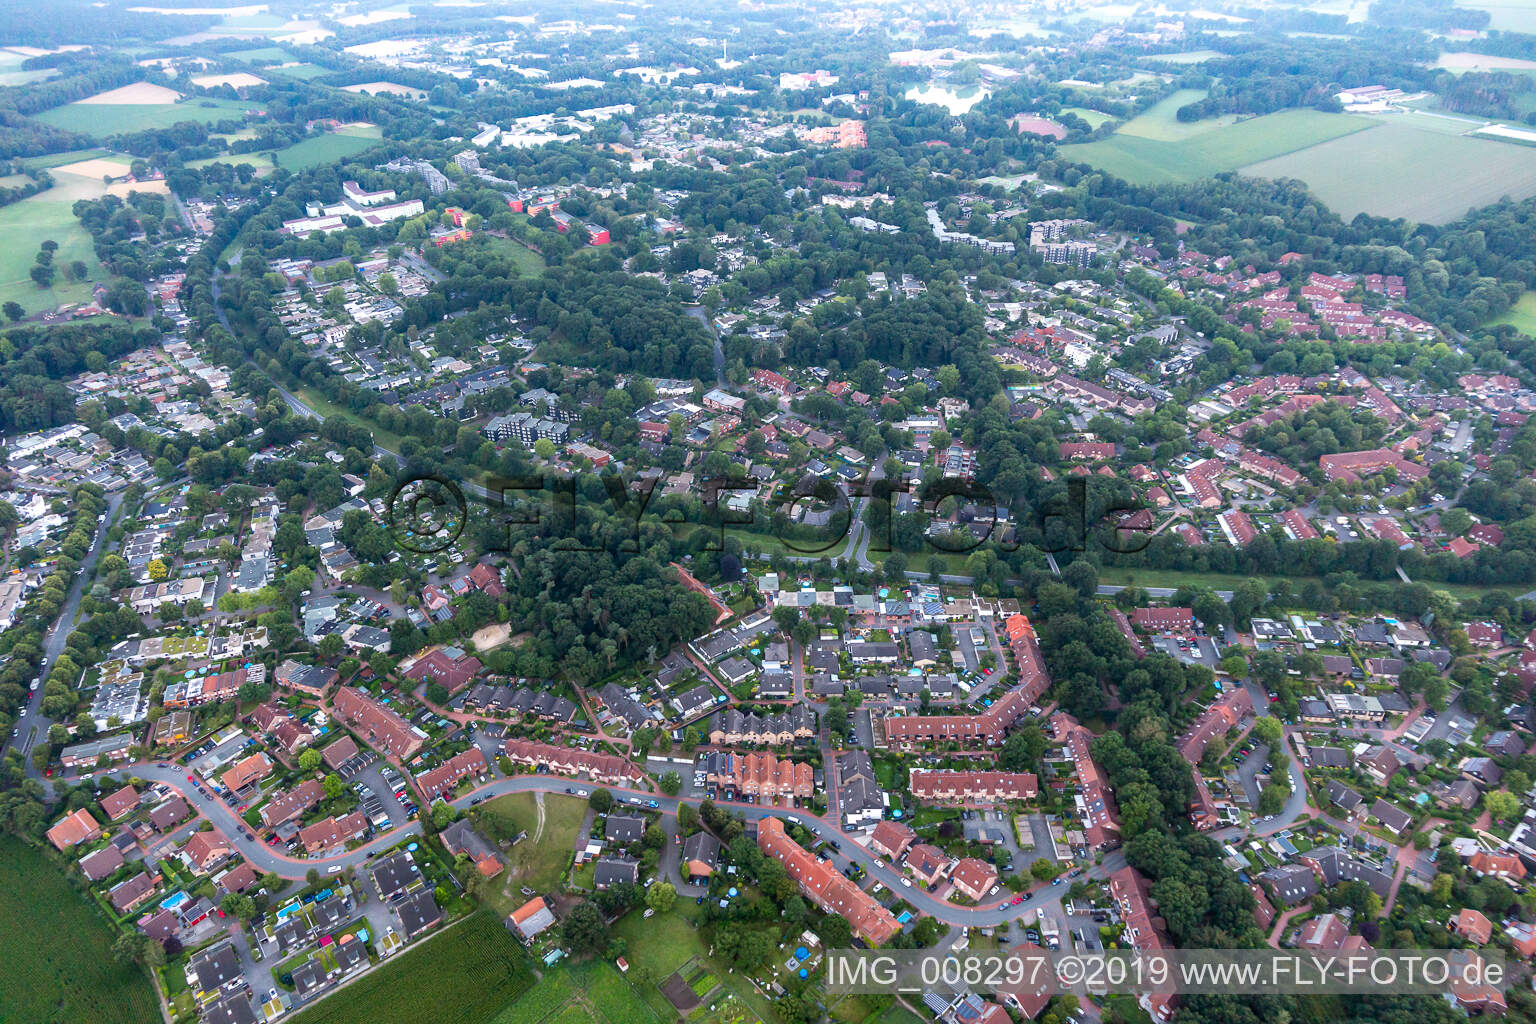 Aerial view of Barkenberg in the state North Rhine-Westphalia, Germany